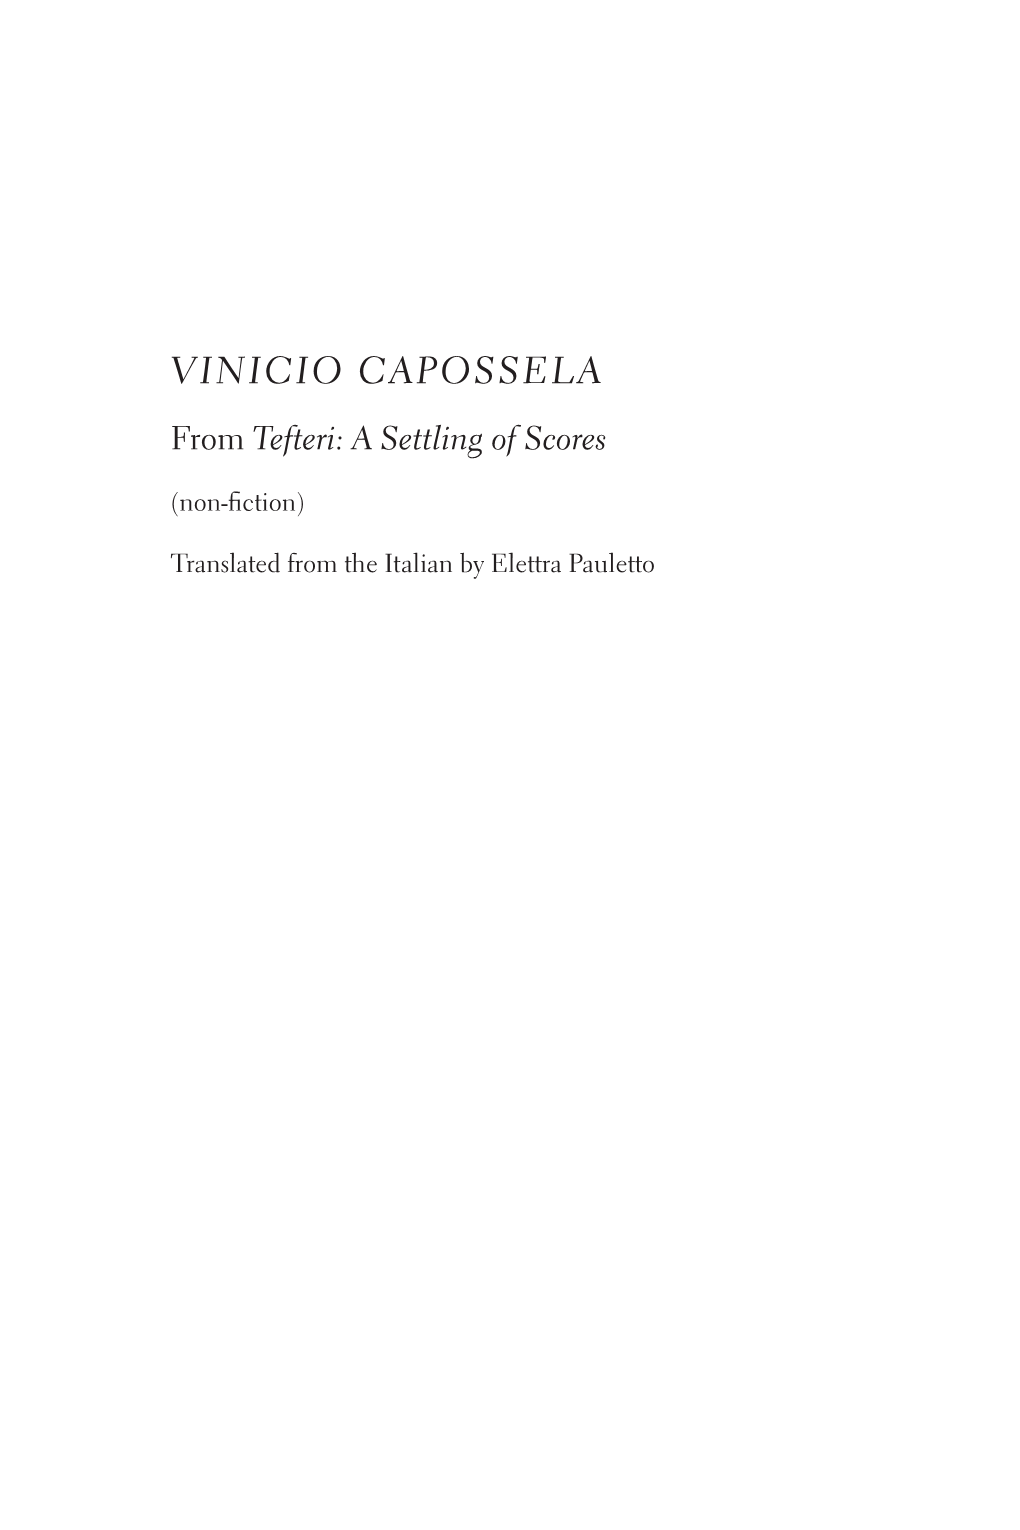 VINICIO CAPOSSELA from Tefteri: a Settling of Scores